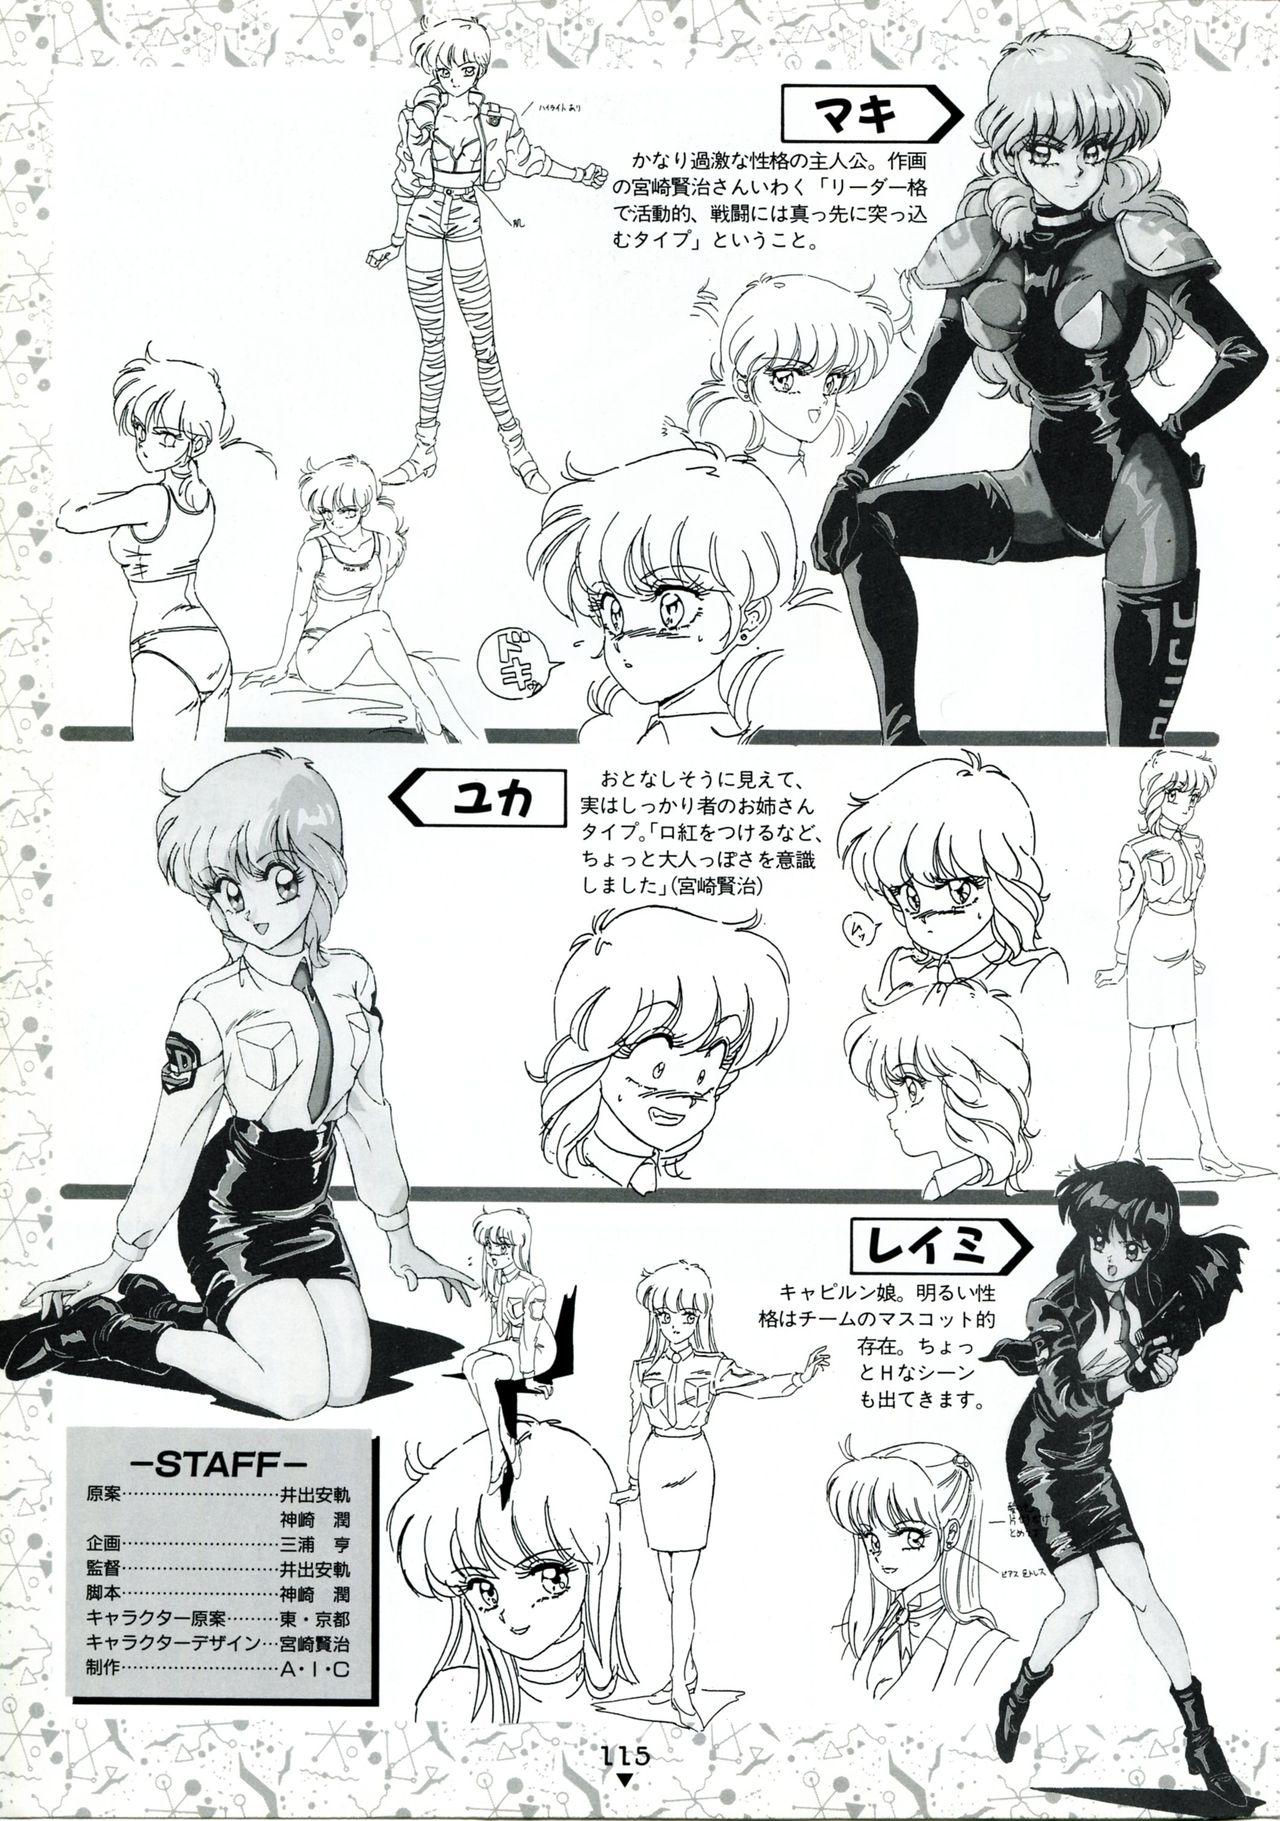 Bishoujo Anime Daizenshuu - Adult Animation Video Catalog 1991 110